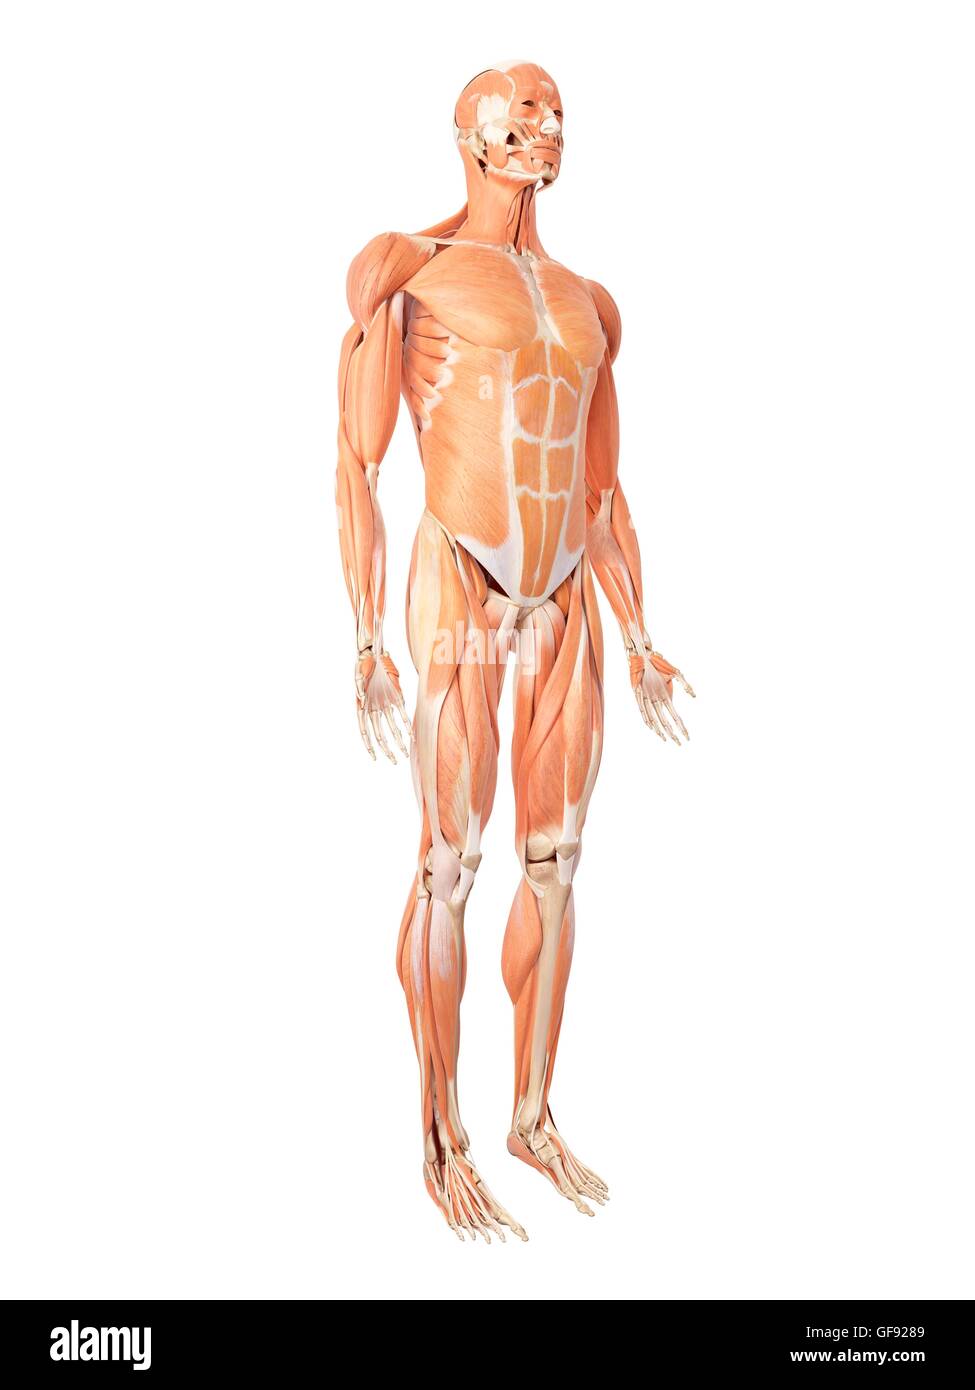 Human muscular system, illustration. Stock Photo